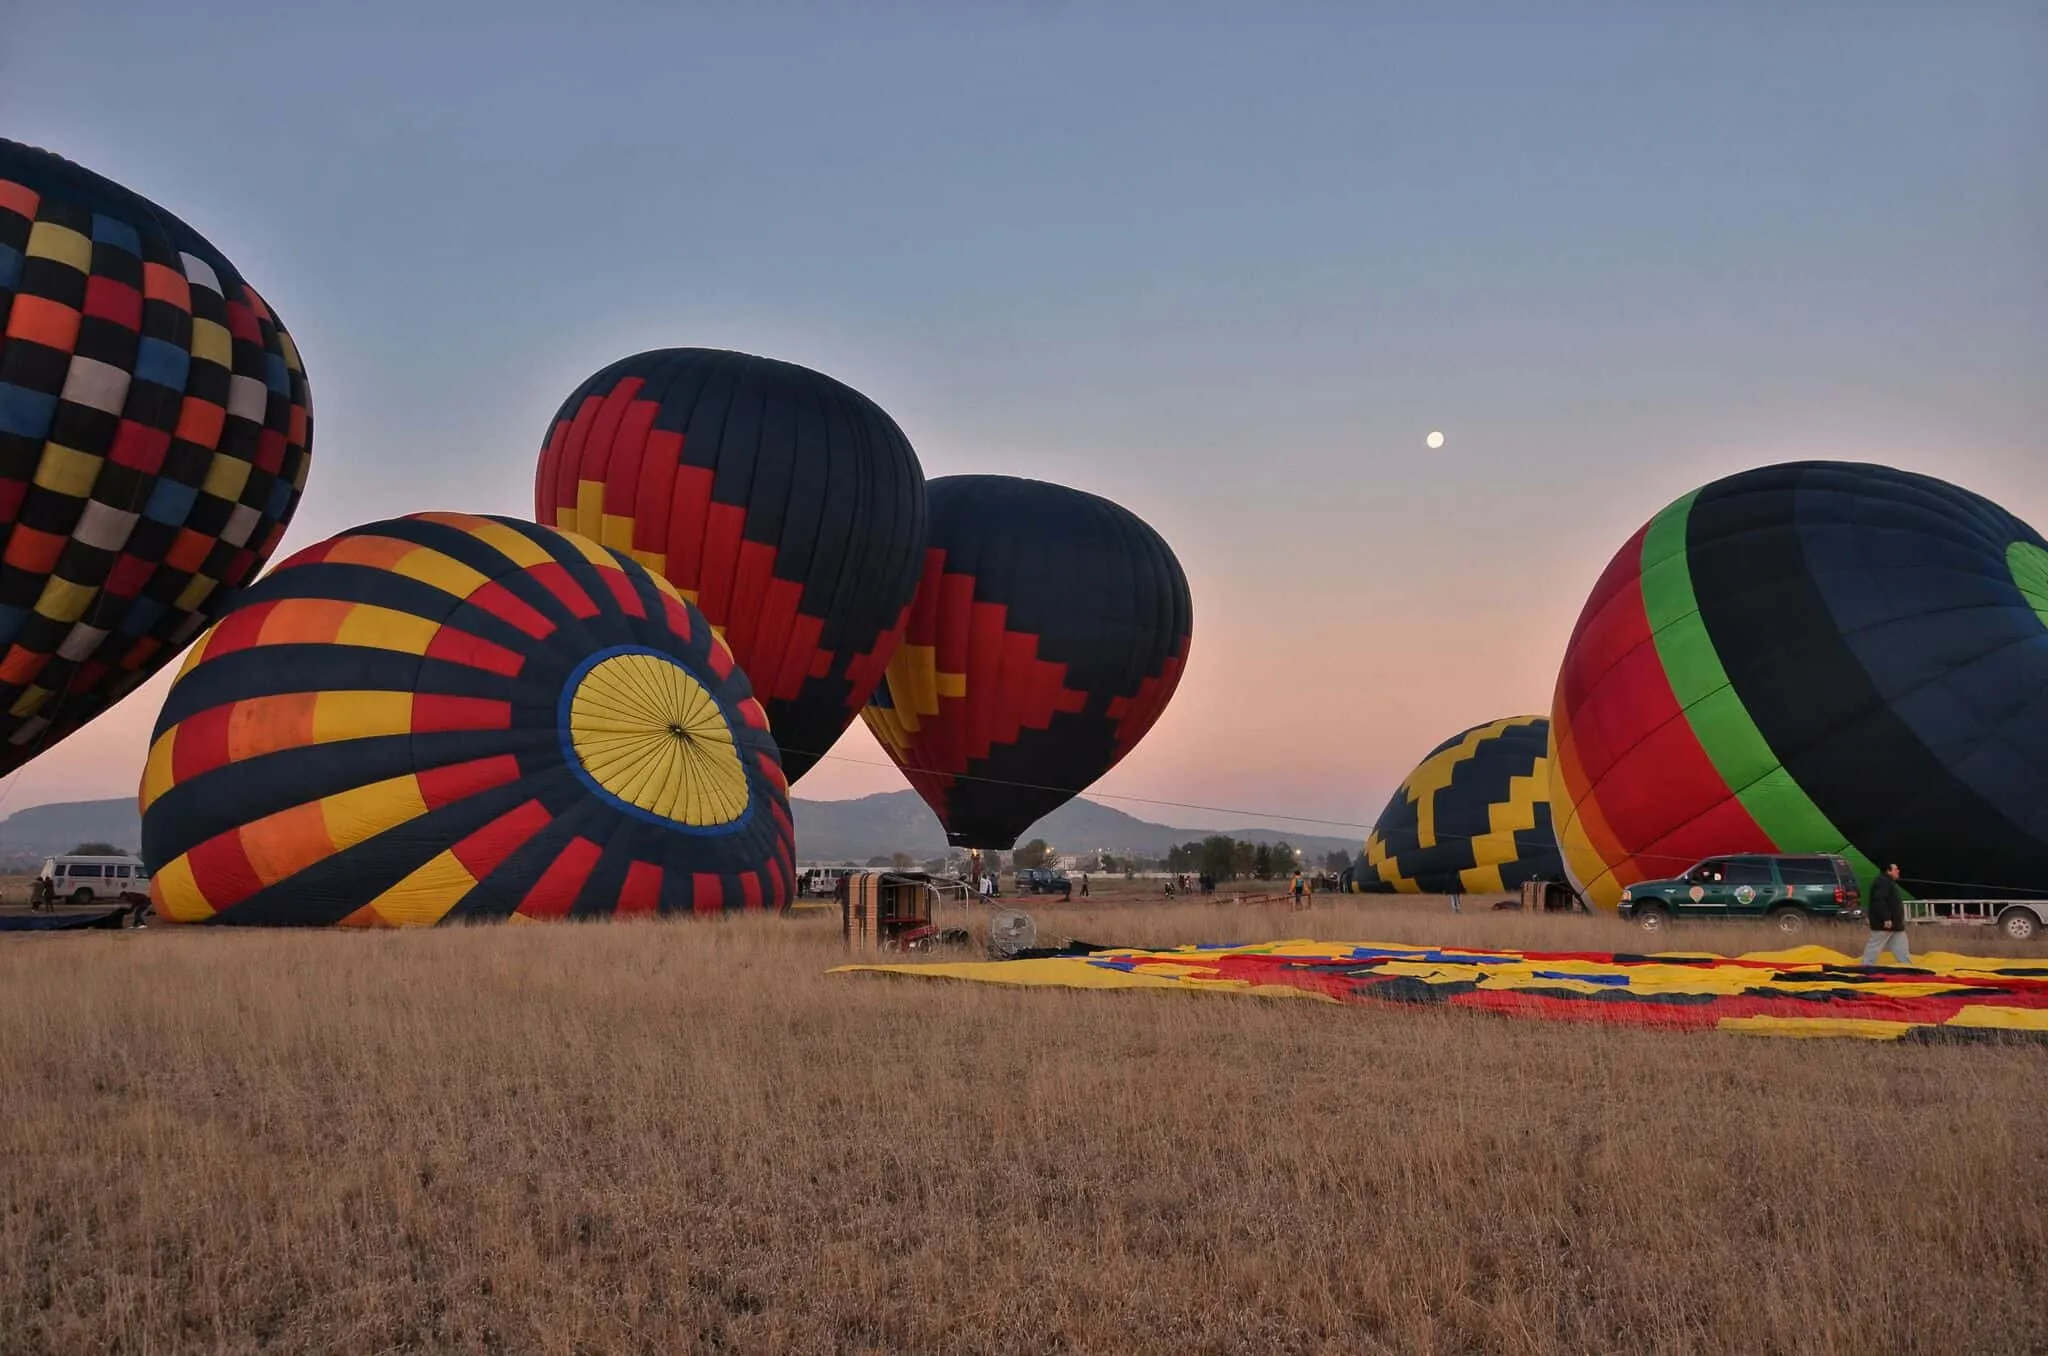 foto de globos aerostaticos en Tequisquiapan Querétaro Mexico Expeditions Travel Platform